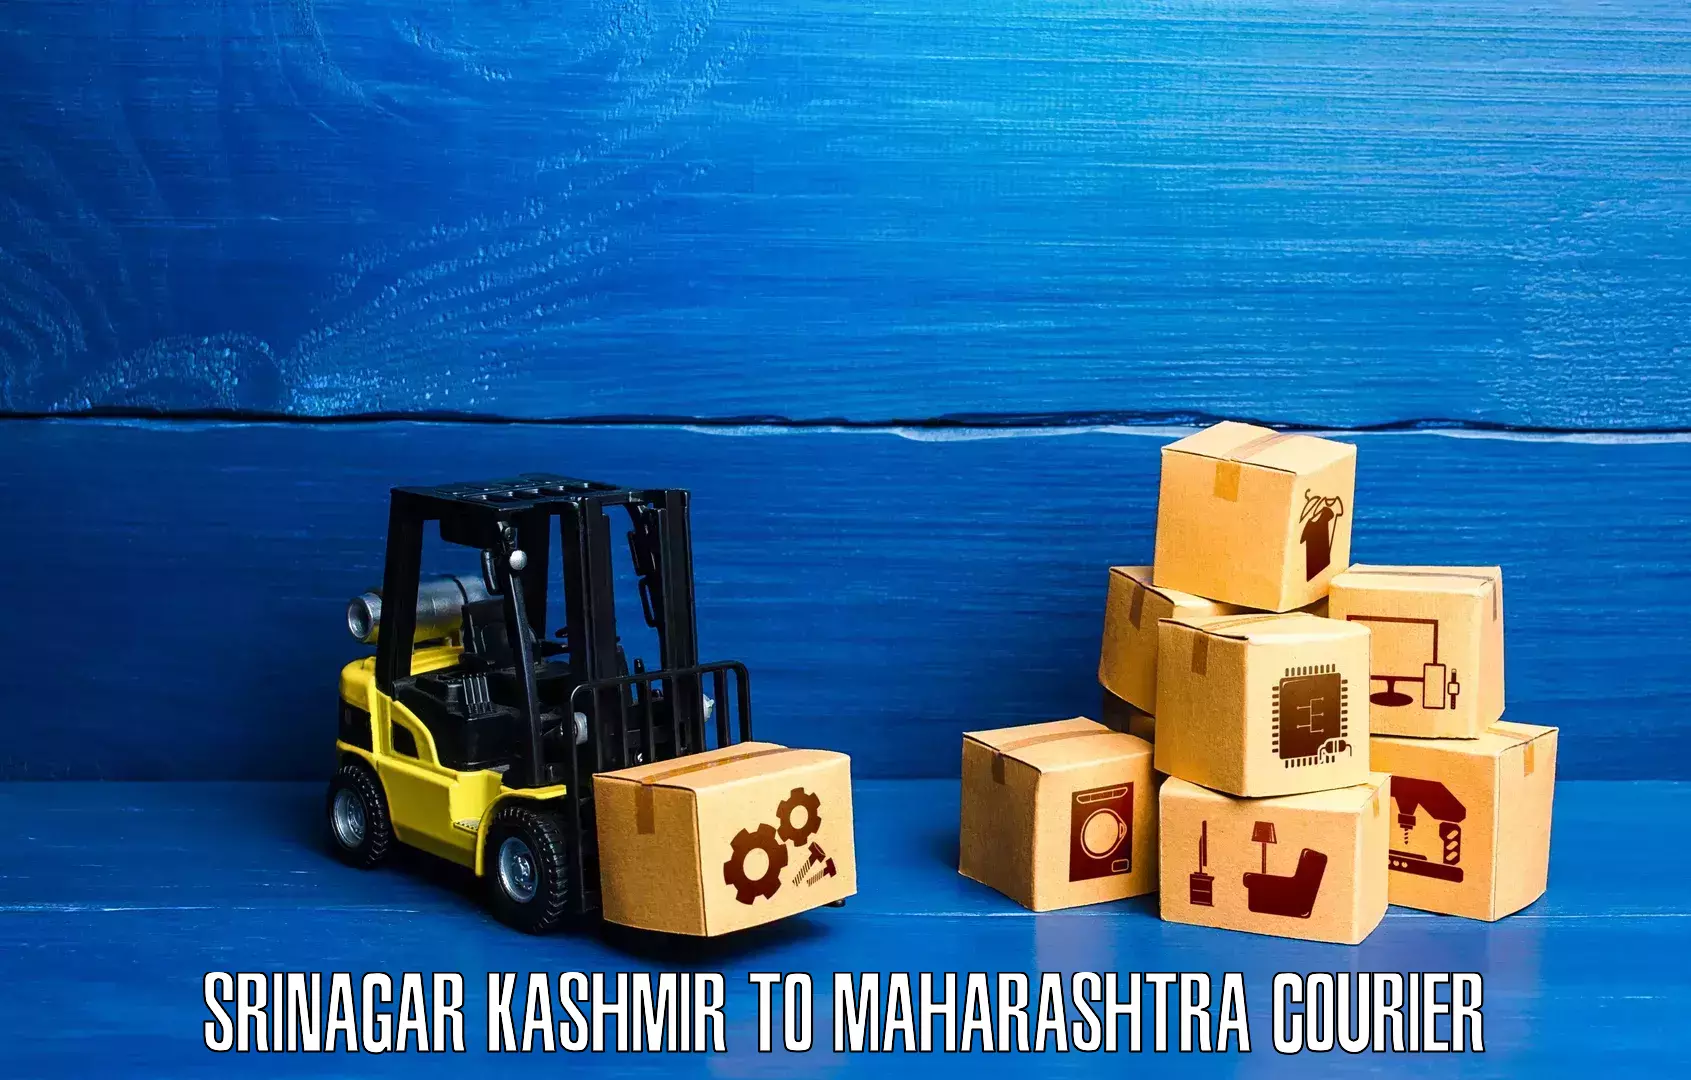 Cargo delivery service Srinagar Kashmir to Maharashtra